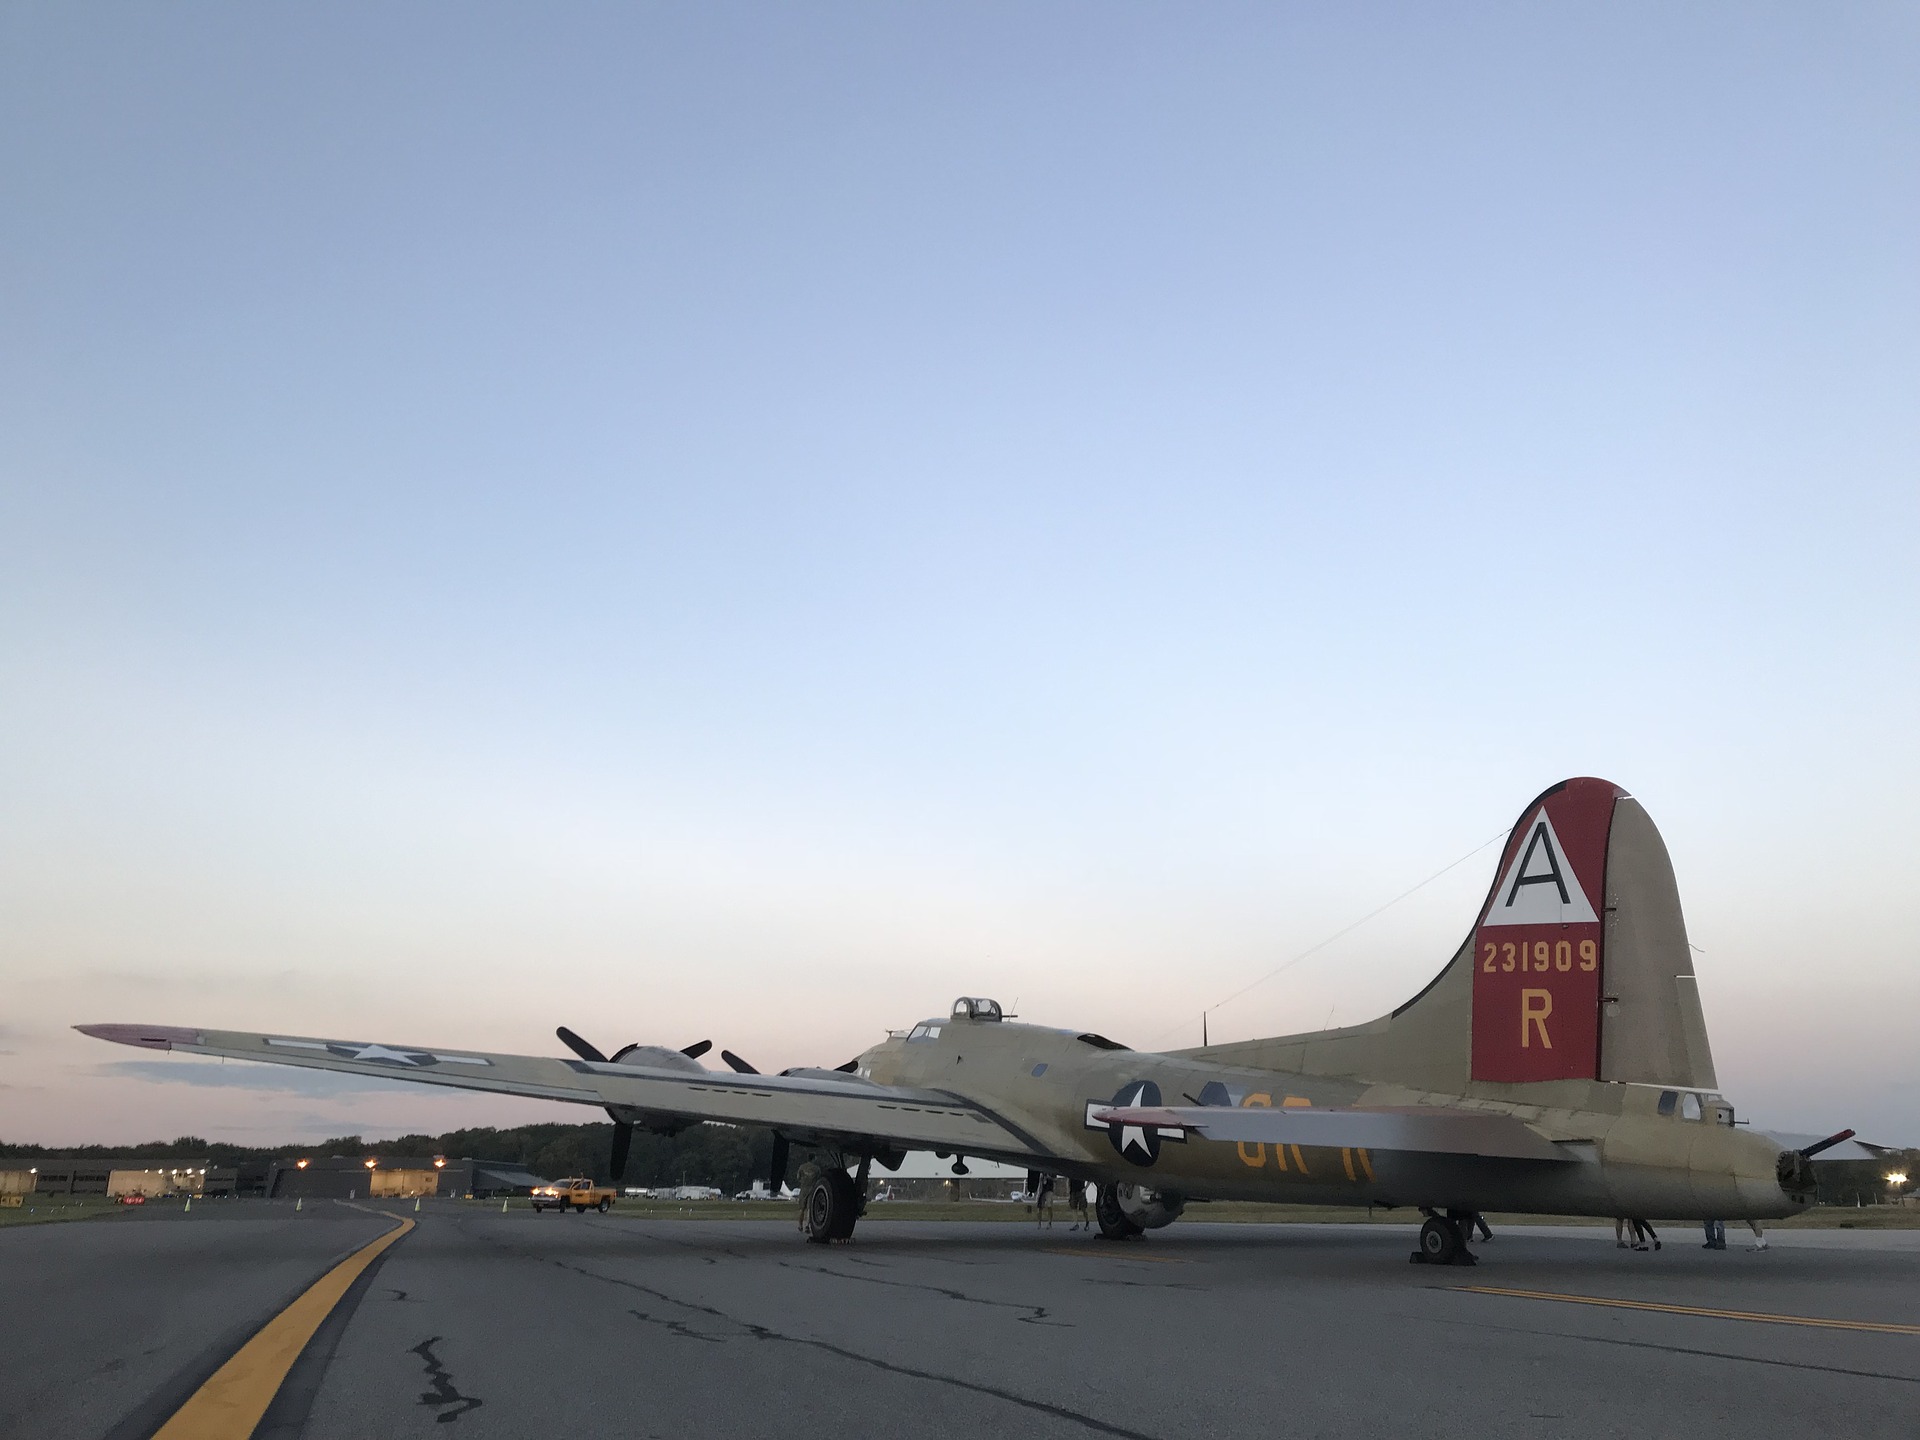 Boeing B-17 aircraft